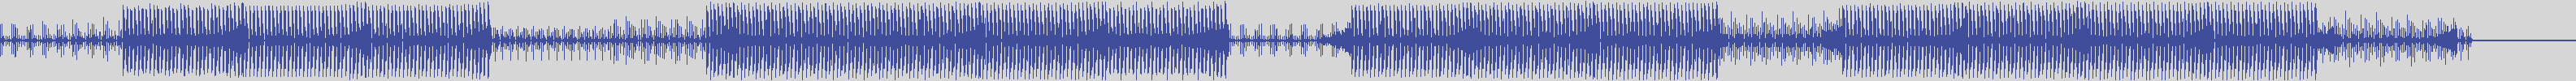 nf_boyz_records [NFY057] Lloyd Long - Periplo [Tribal Edit] audio wave form